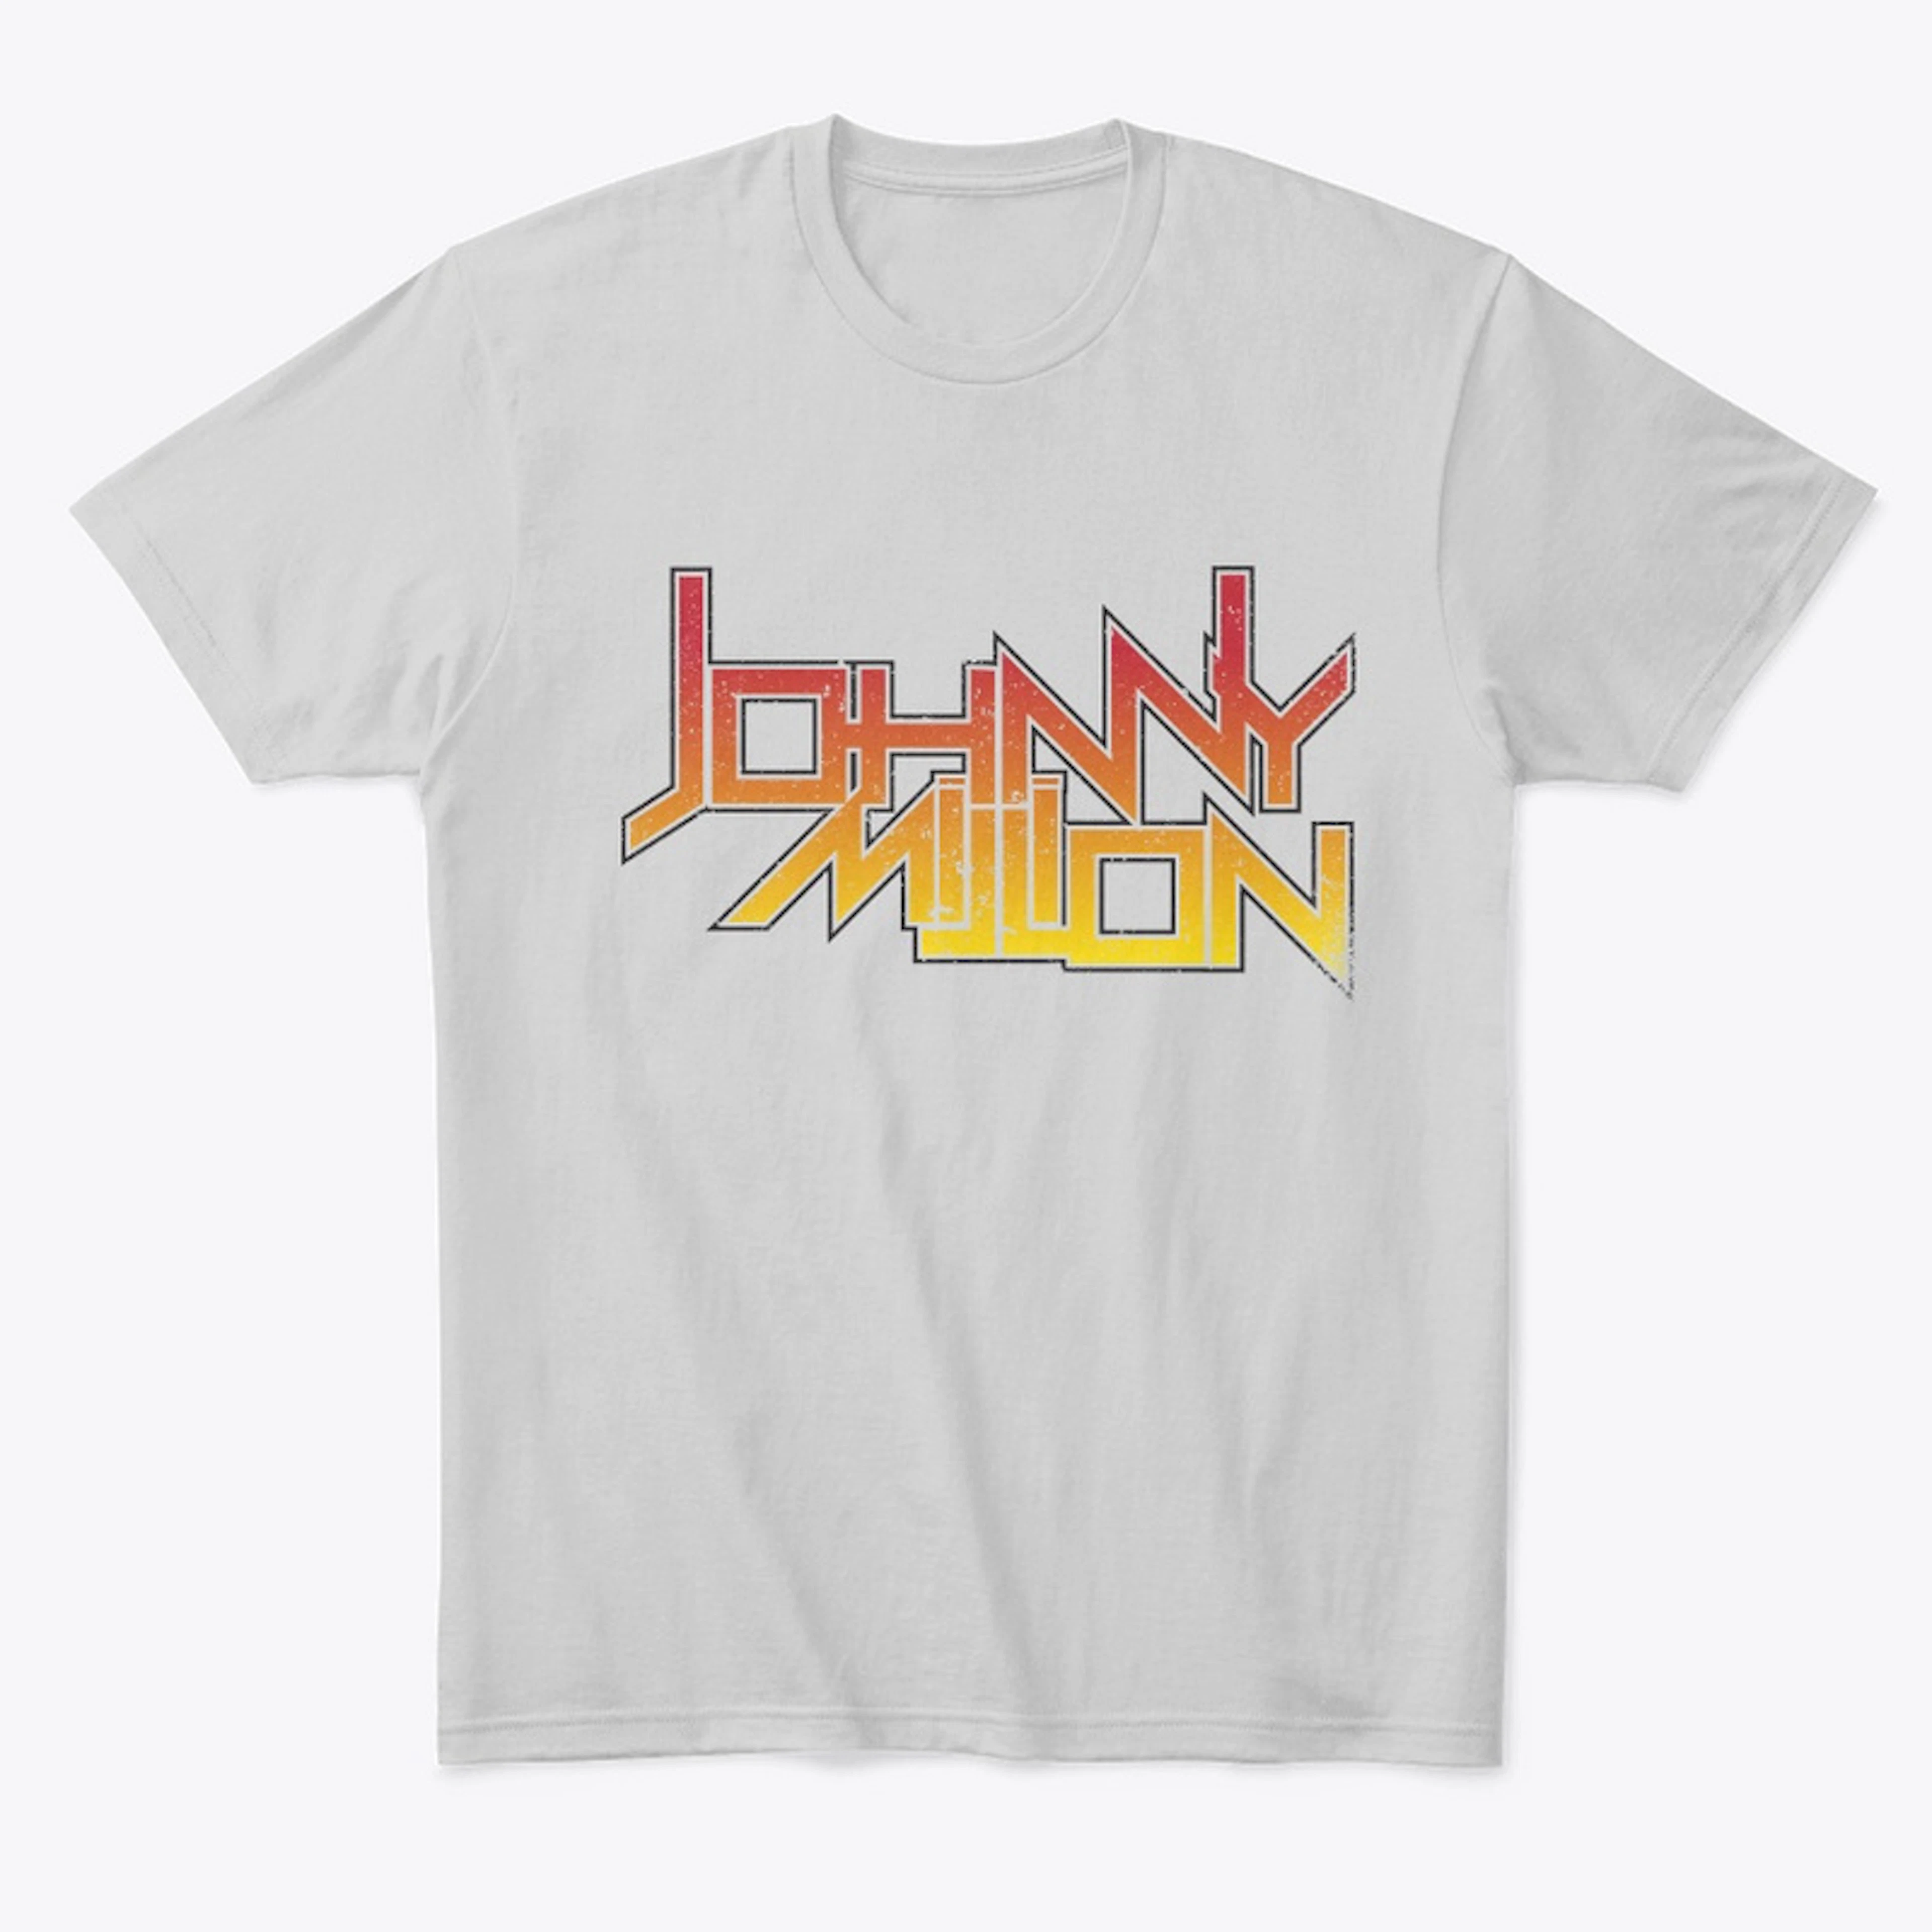 Johnny Million Logo with dark outline